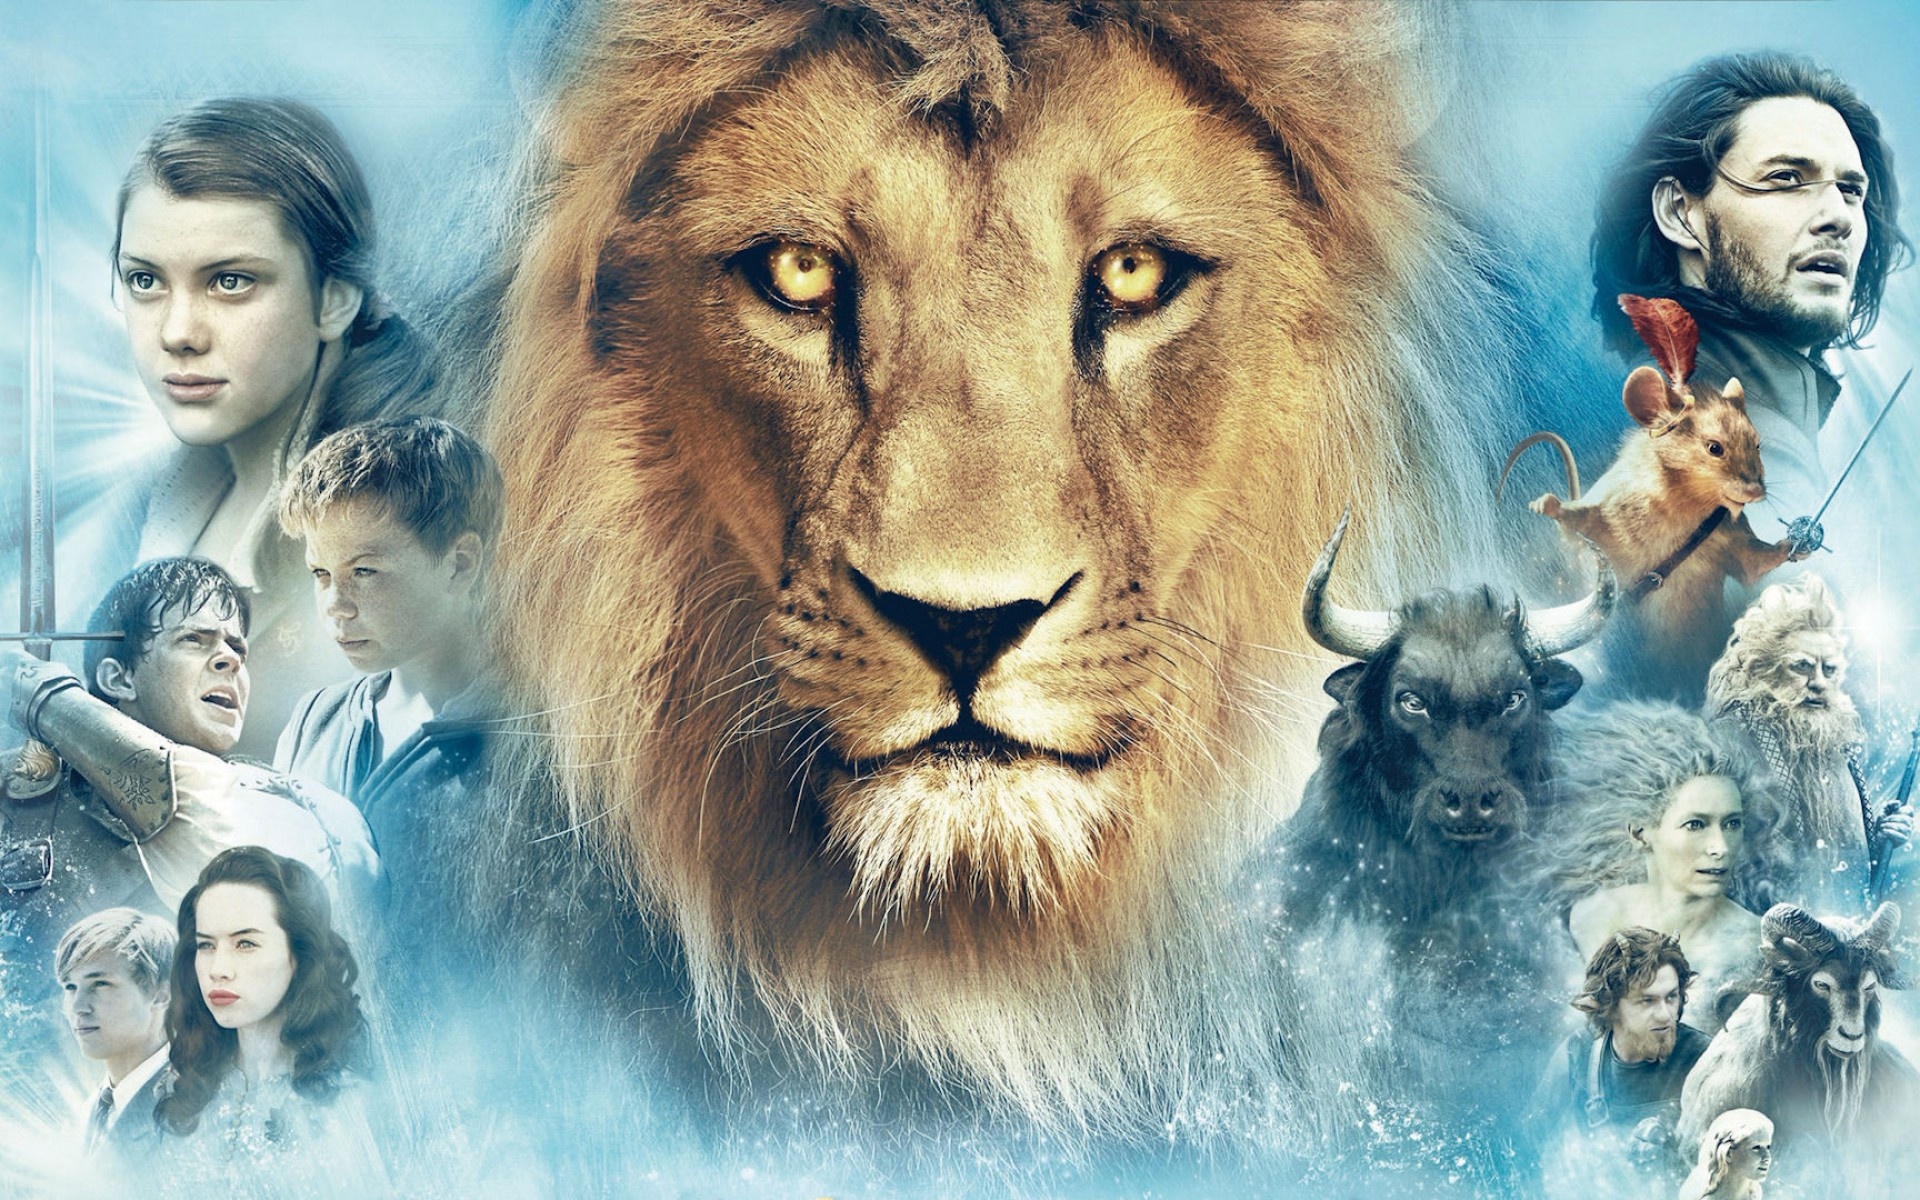 Voyage of the Dawn Treader, Narnia movie, HD wallpaper, Background image, 1920x1200 HD Desktop